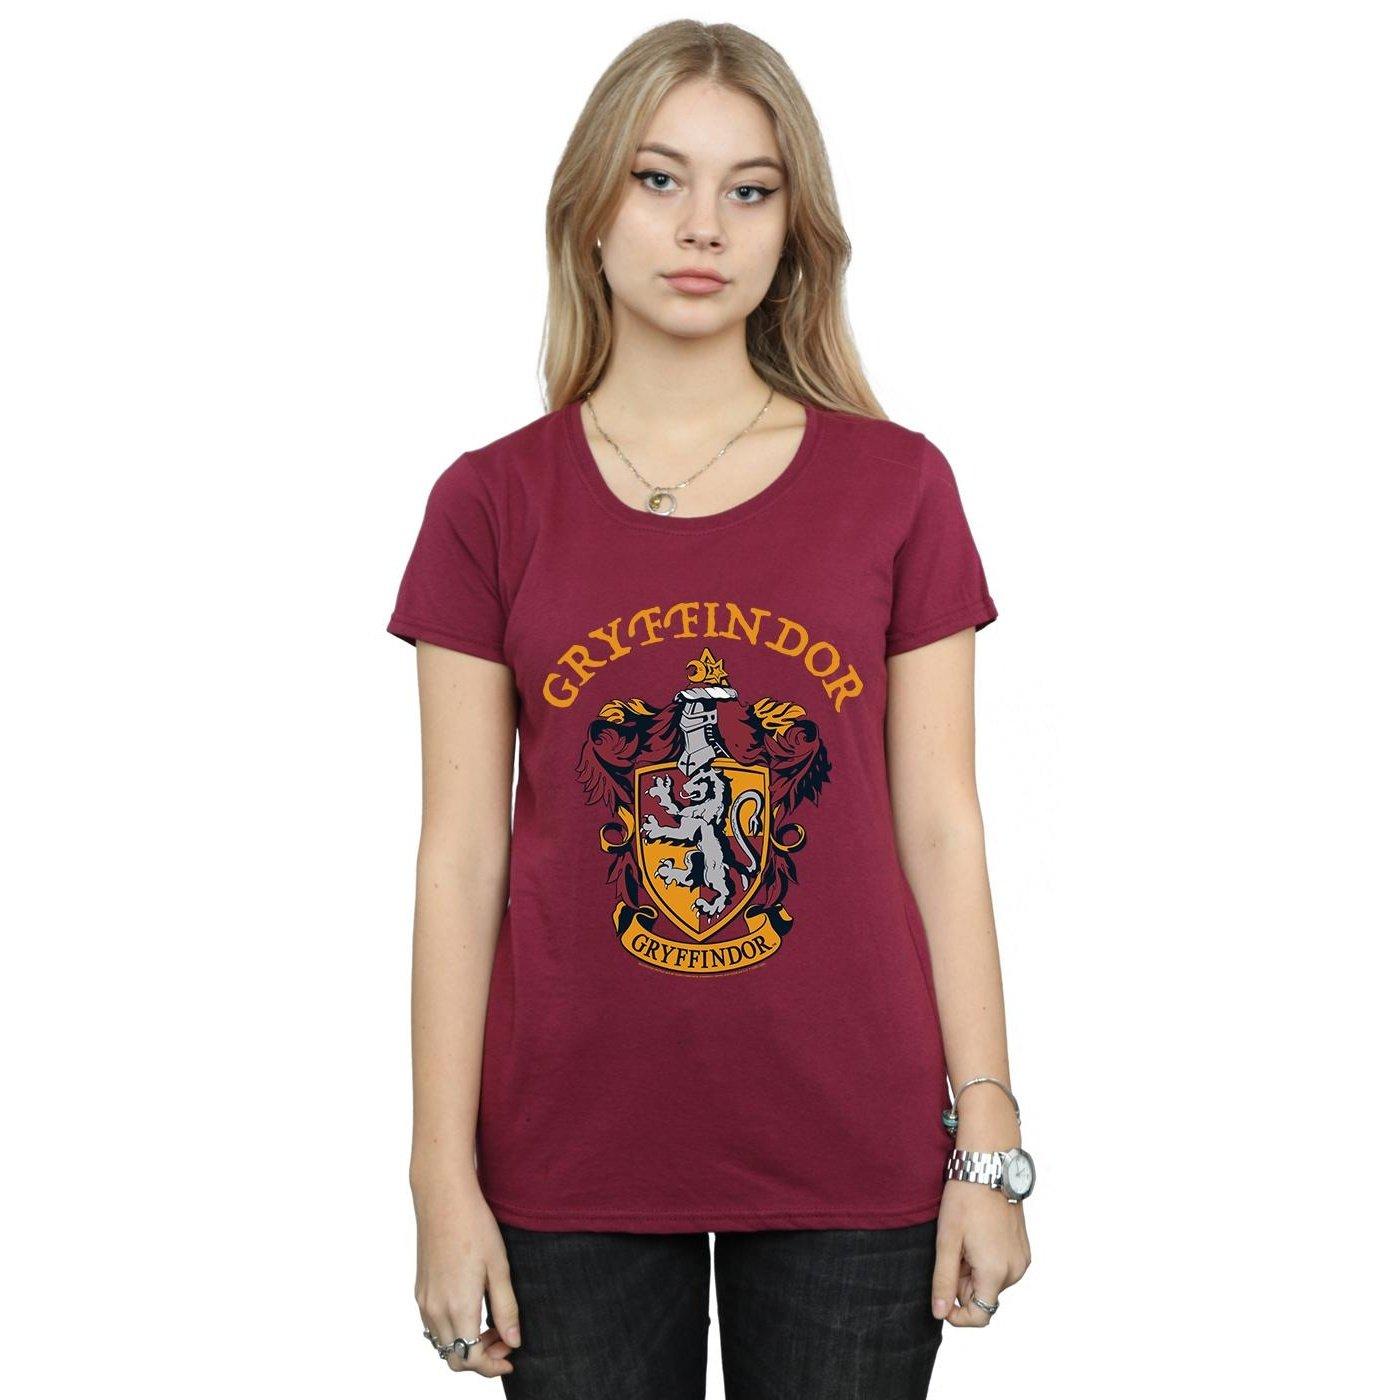 Harry Potter  Gryffindor Crest TShirt 